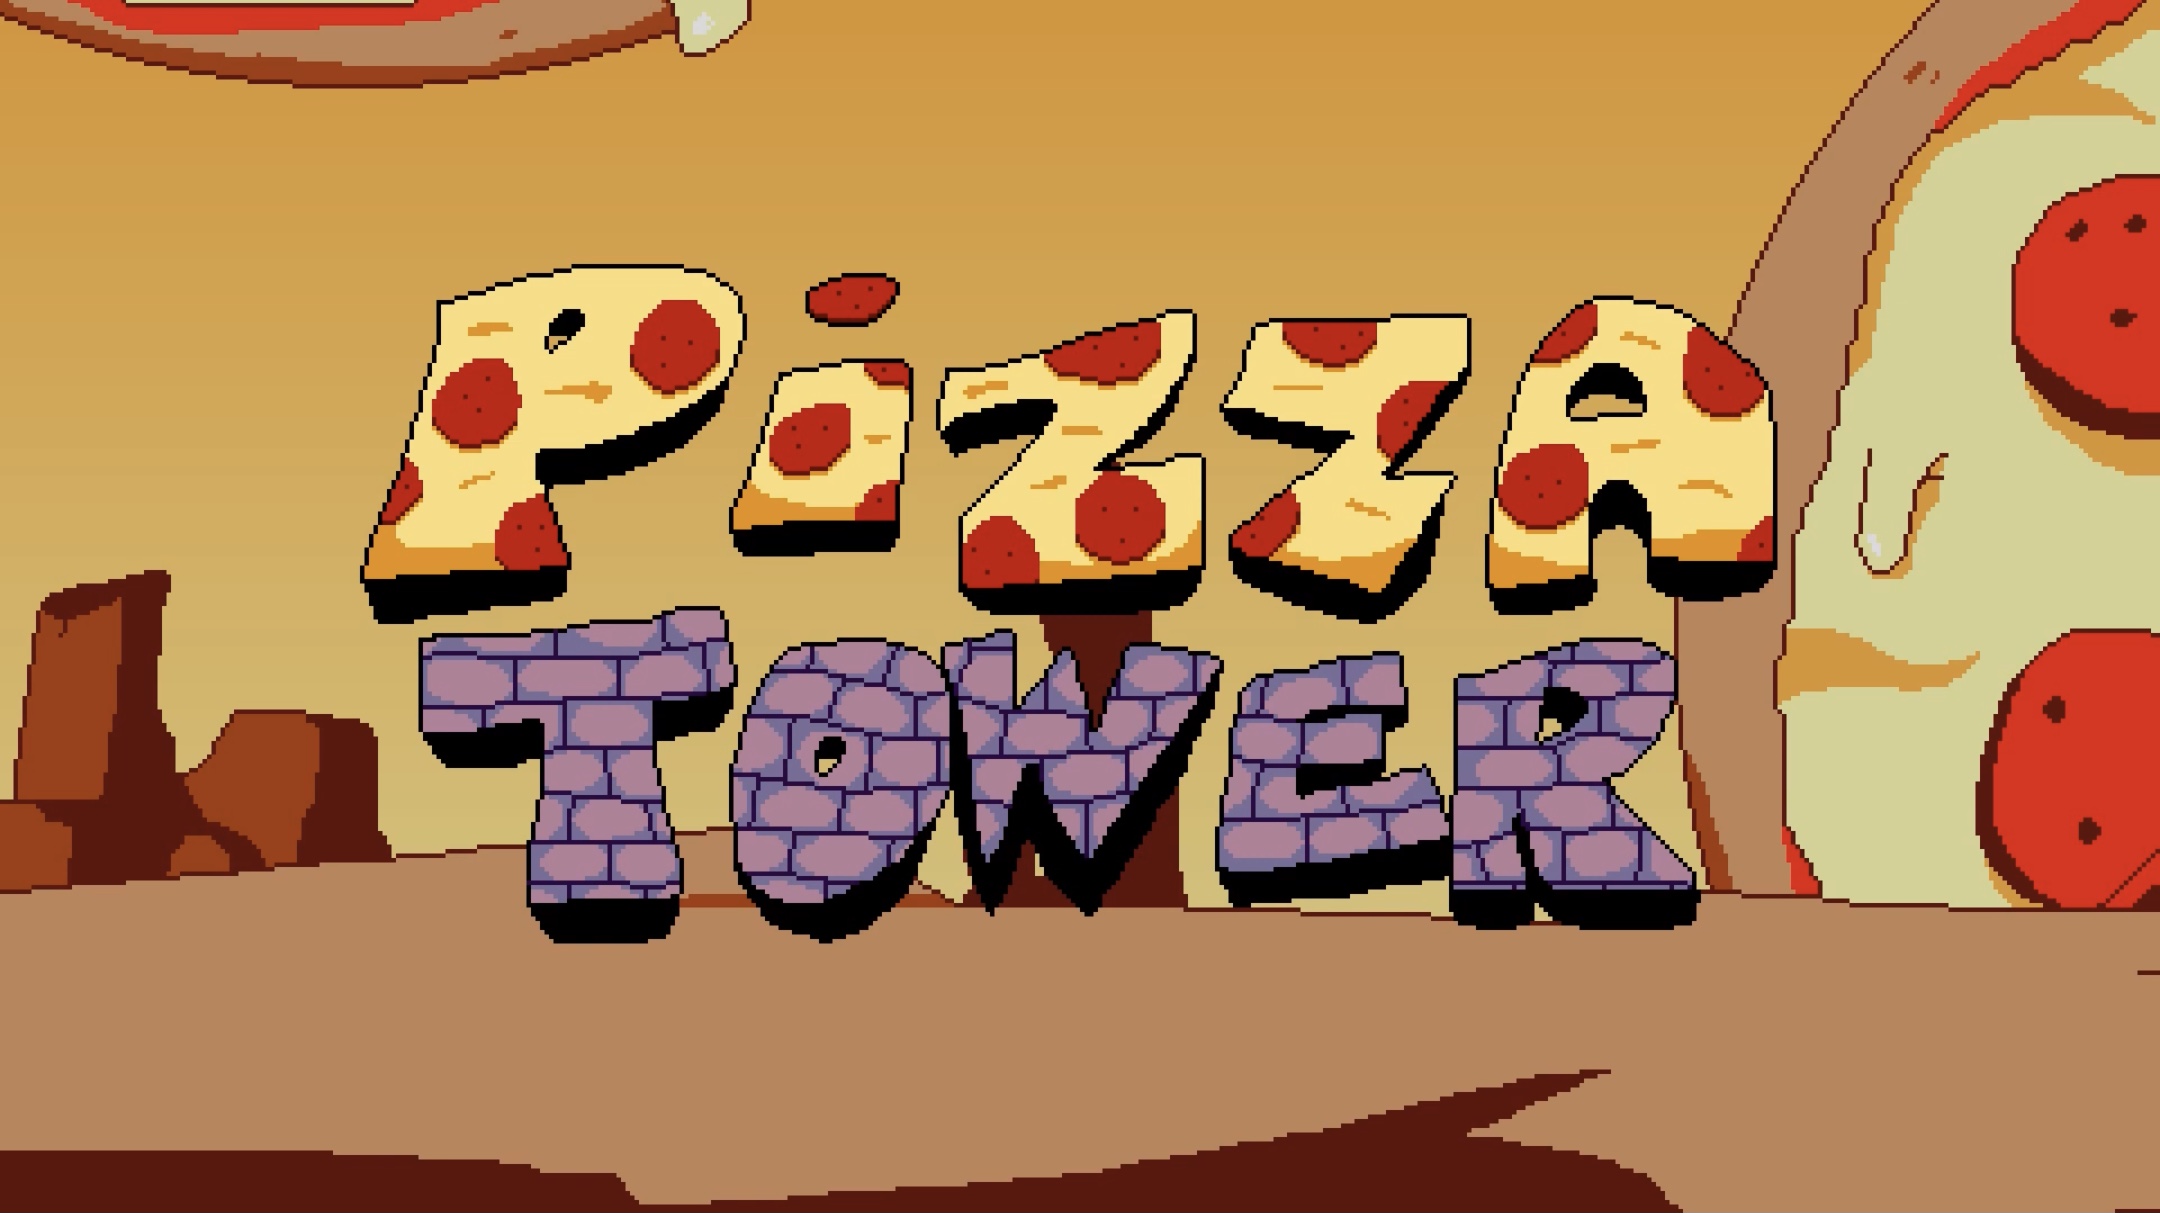 Игры пицца товер. Пизза тавэр. Pizza Tower игра. Игрушки пицца ТАВЕР. Пицца башня.